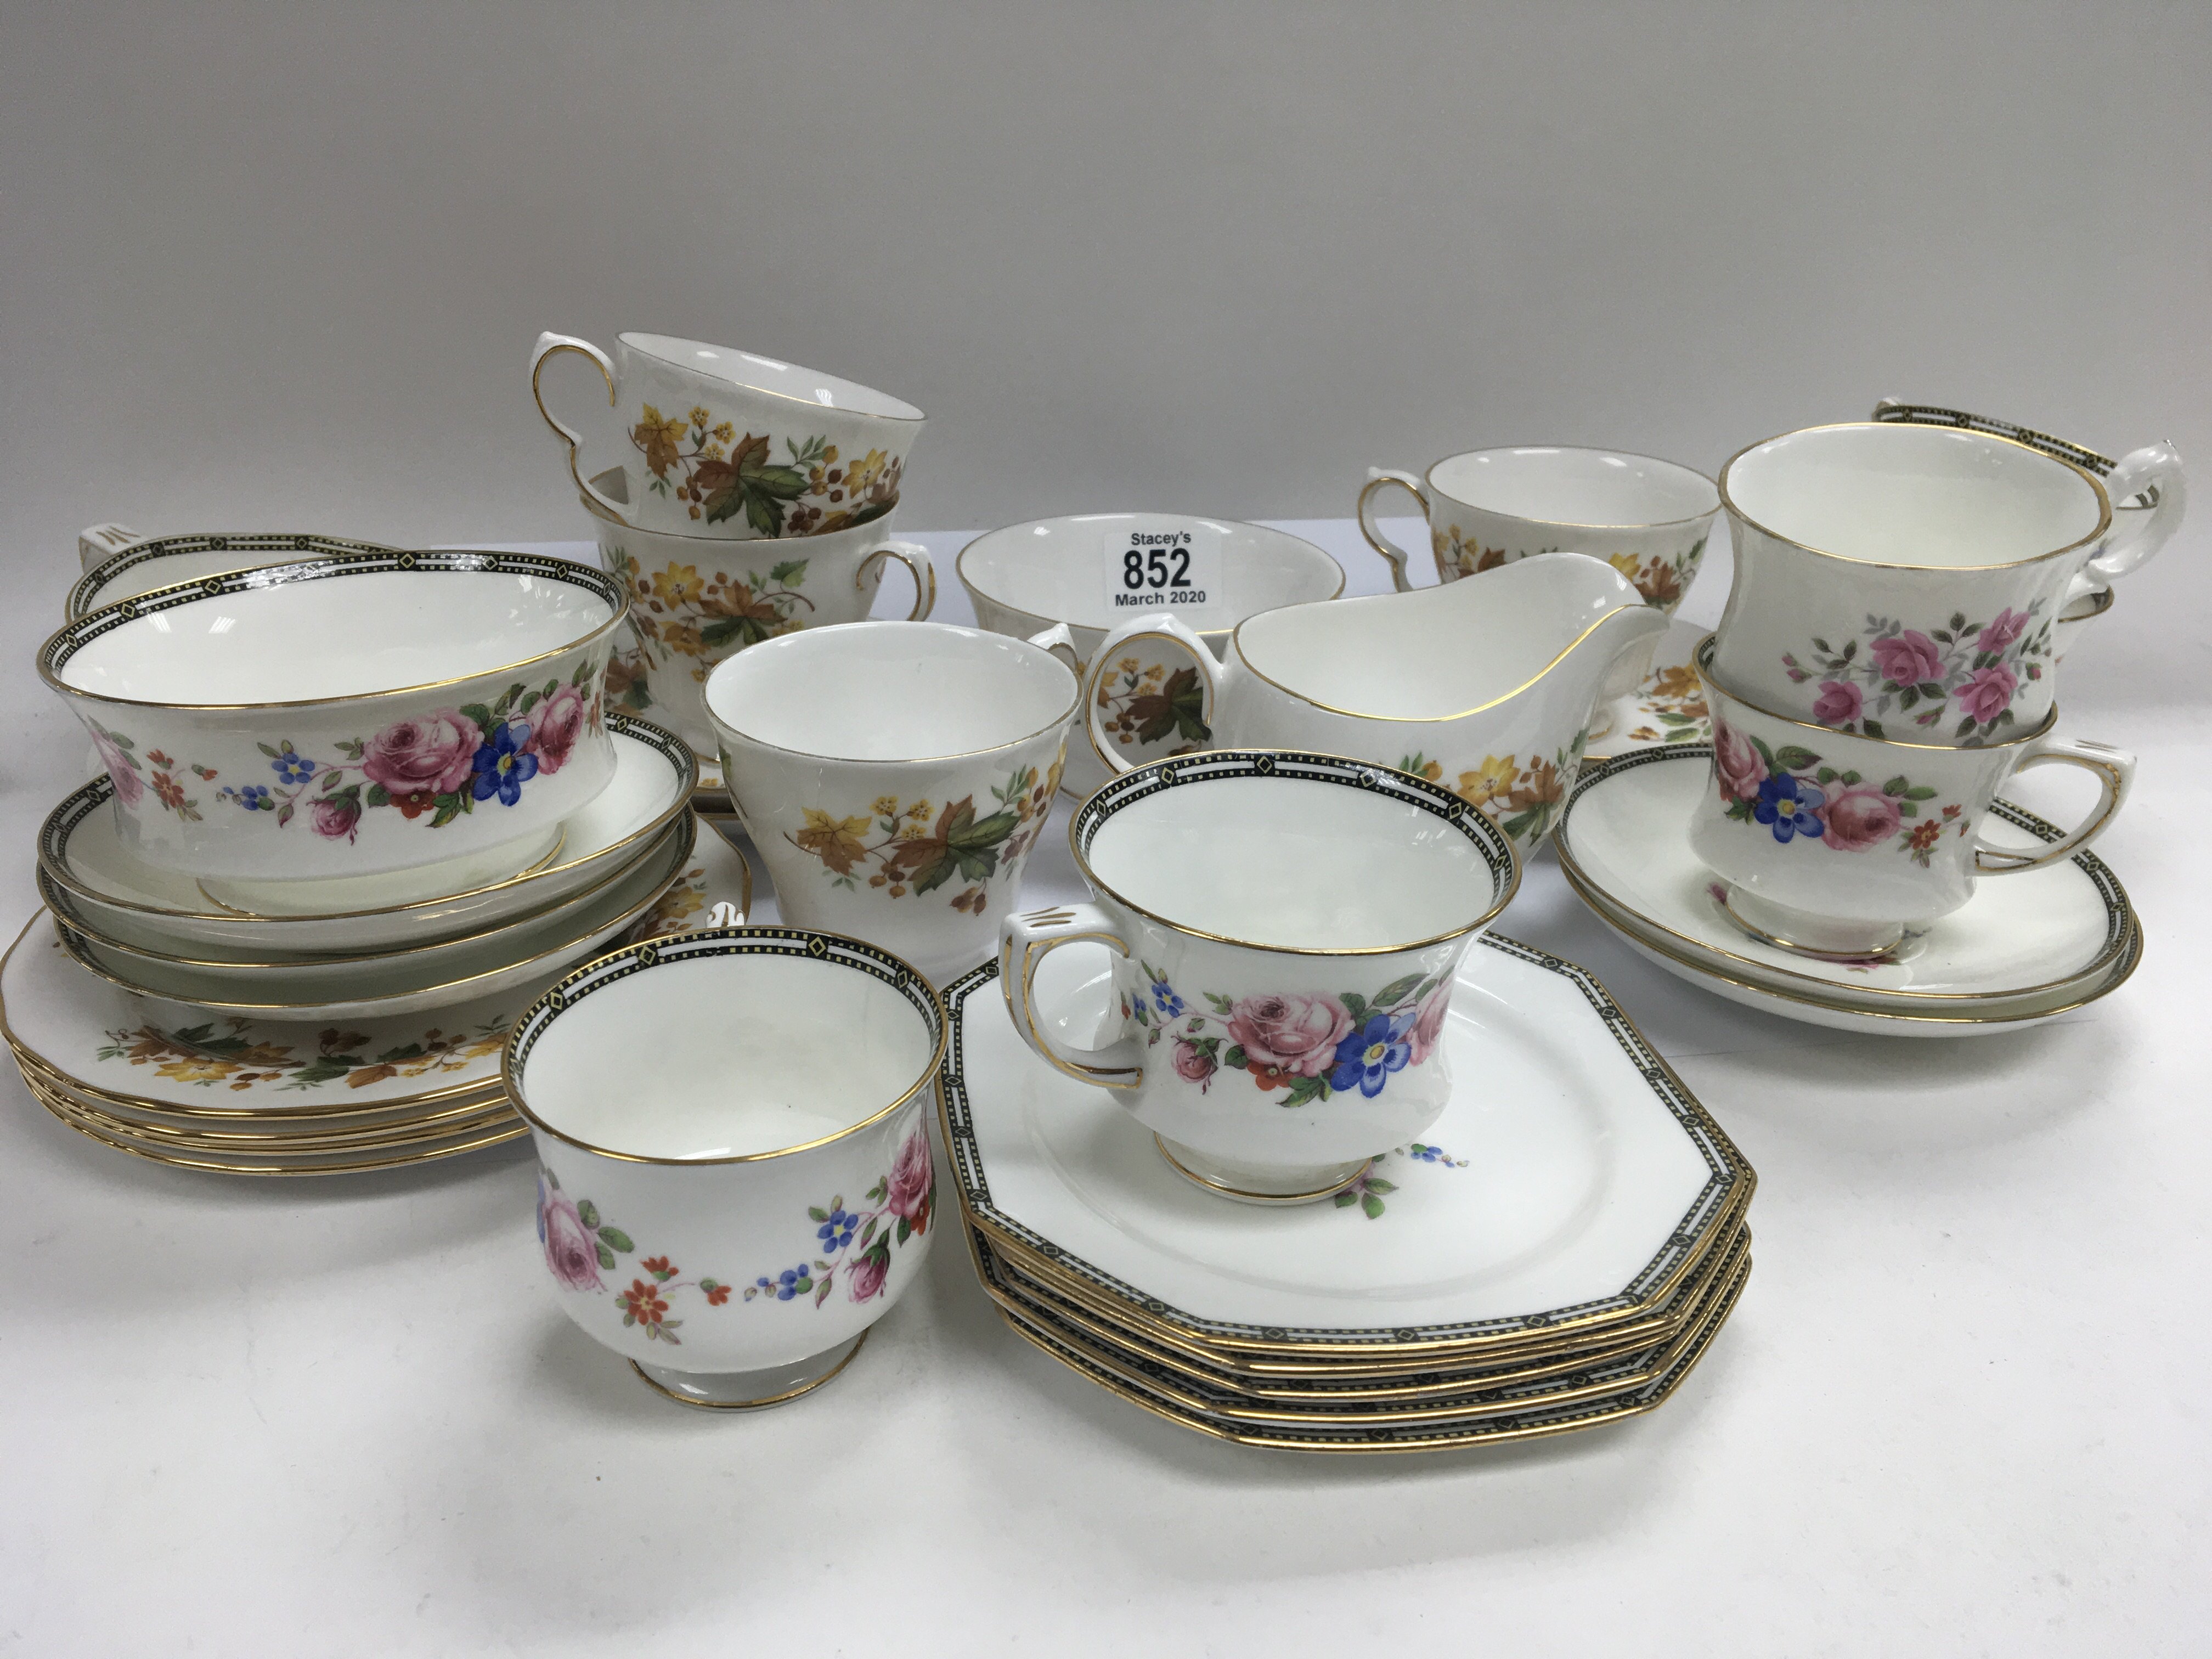 A porcelain Paragon tea set and a bone China Queen